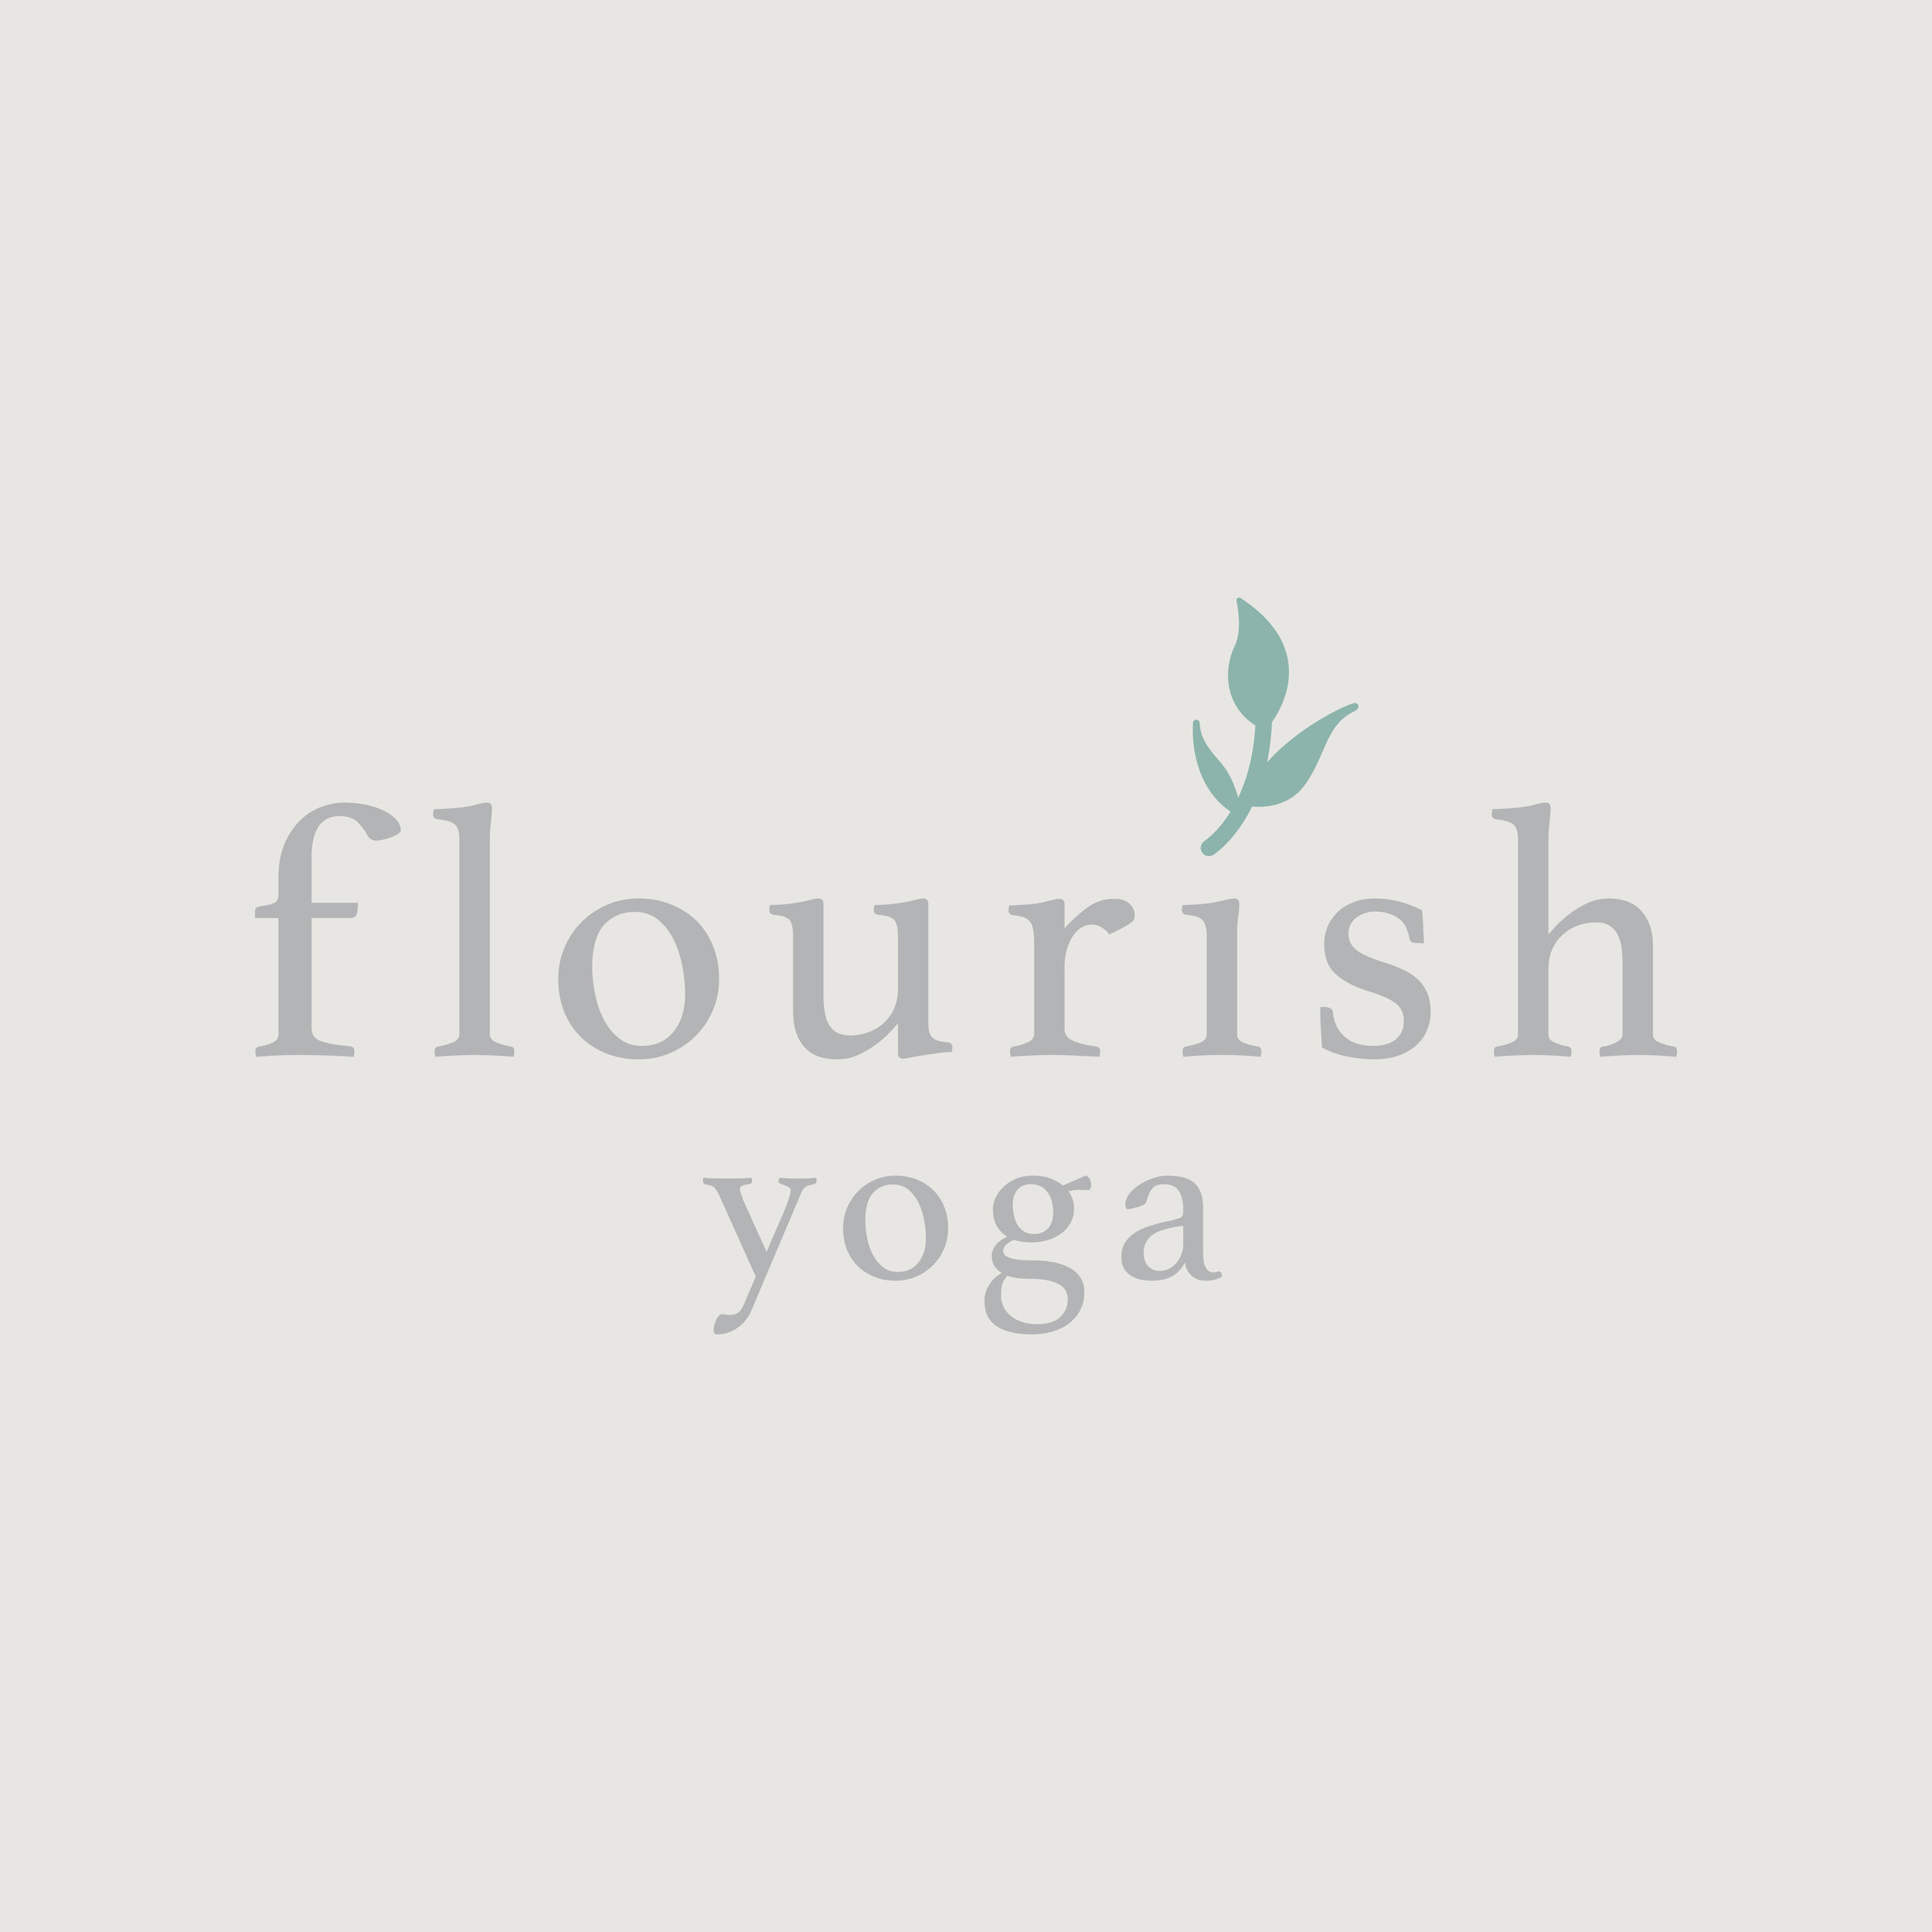 Flourish_InstaVisuals.jpg